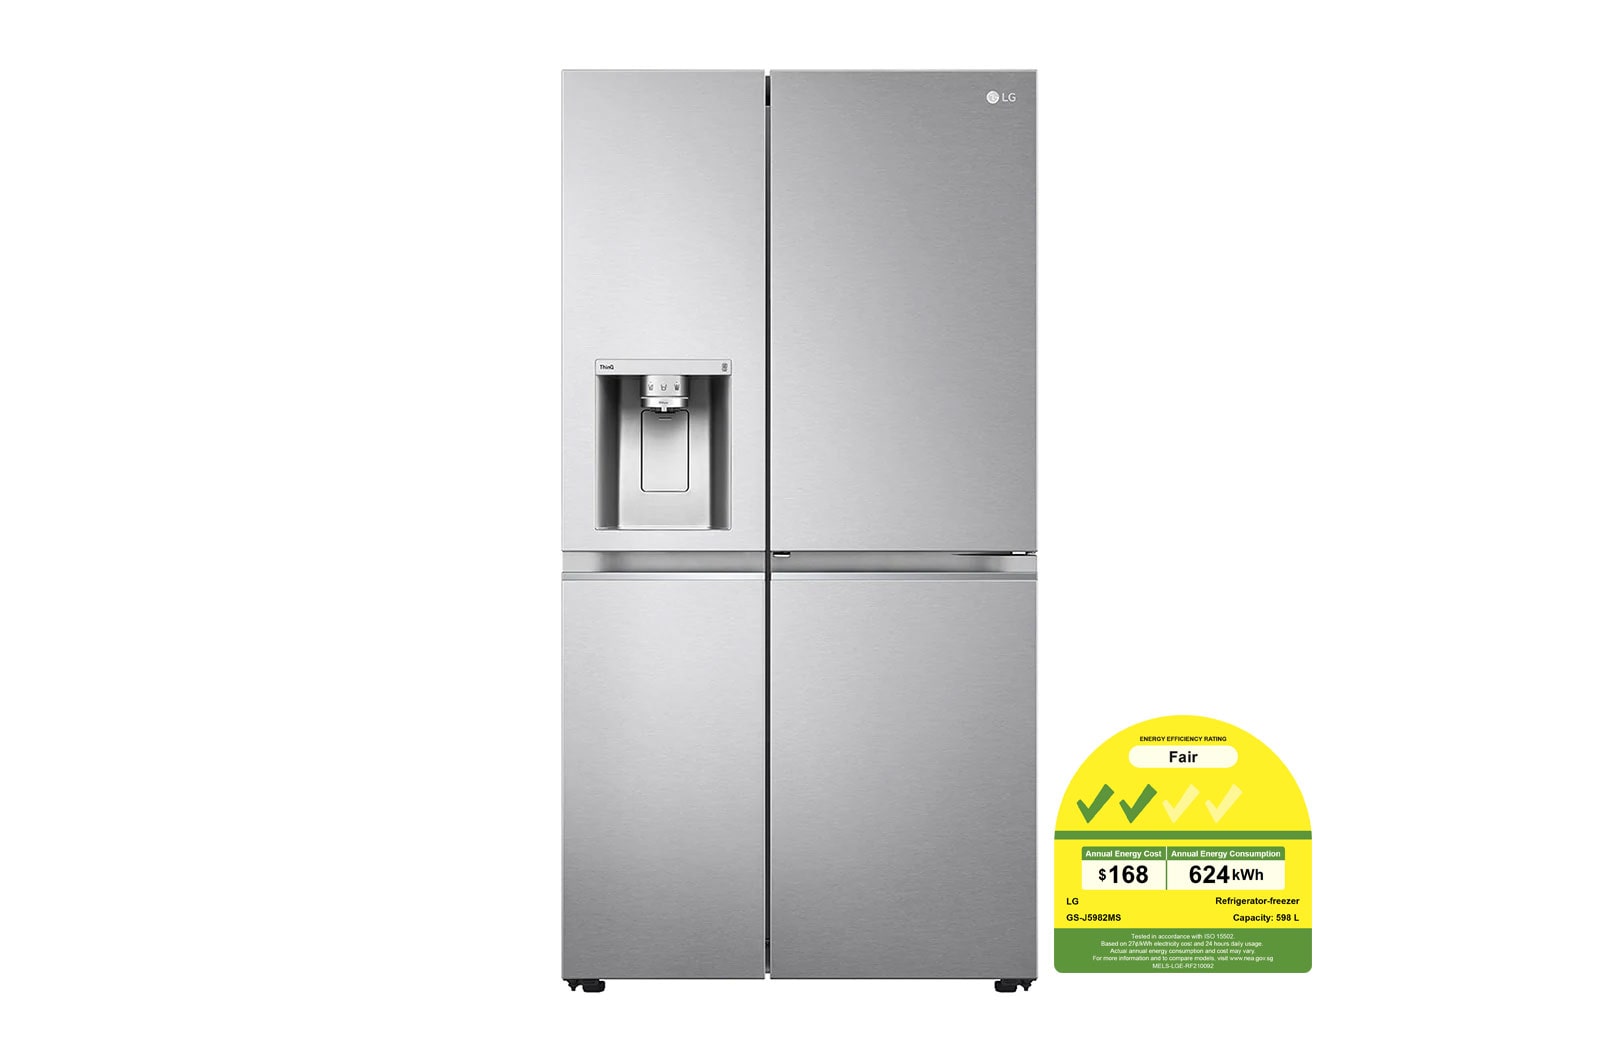 LG 598L side-by-side-fridge with Inverter Linear Compressor in Metal Sorbet, GS-J5982MS